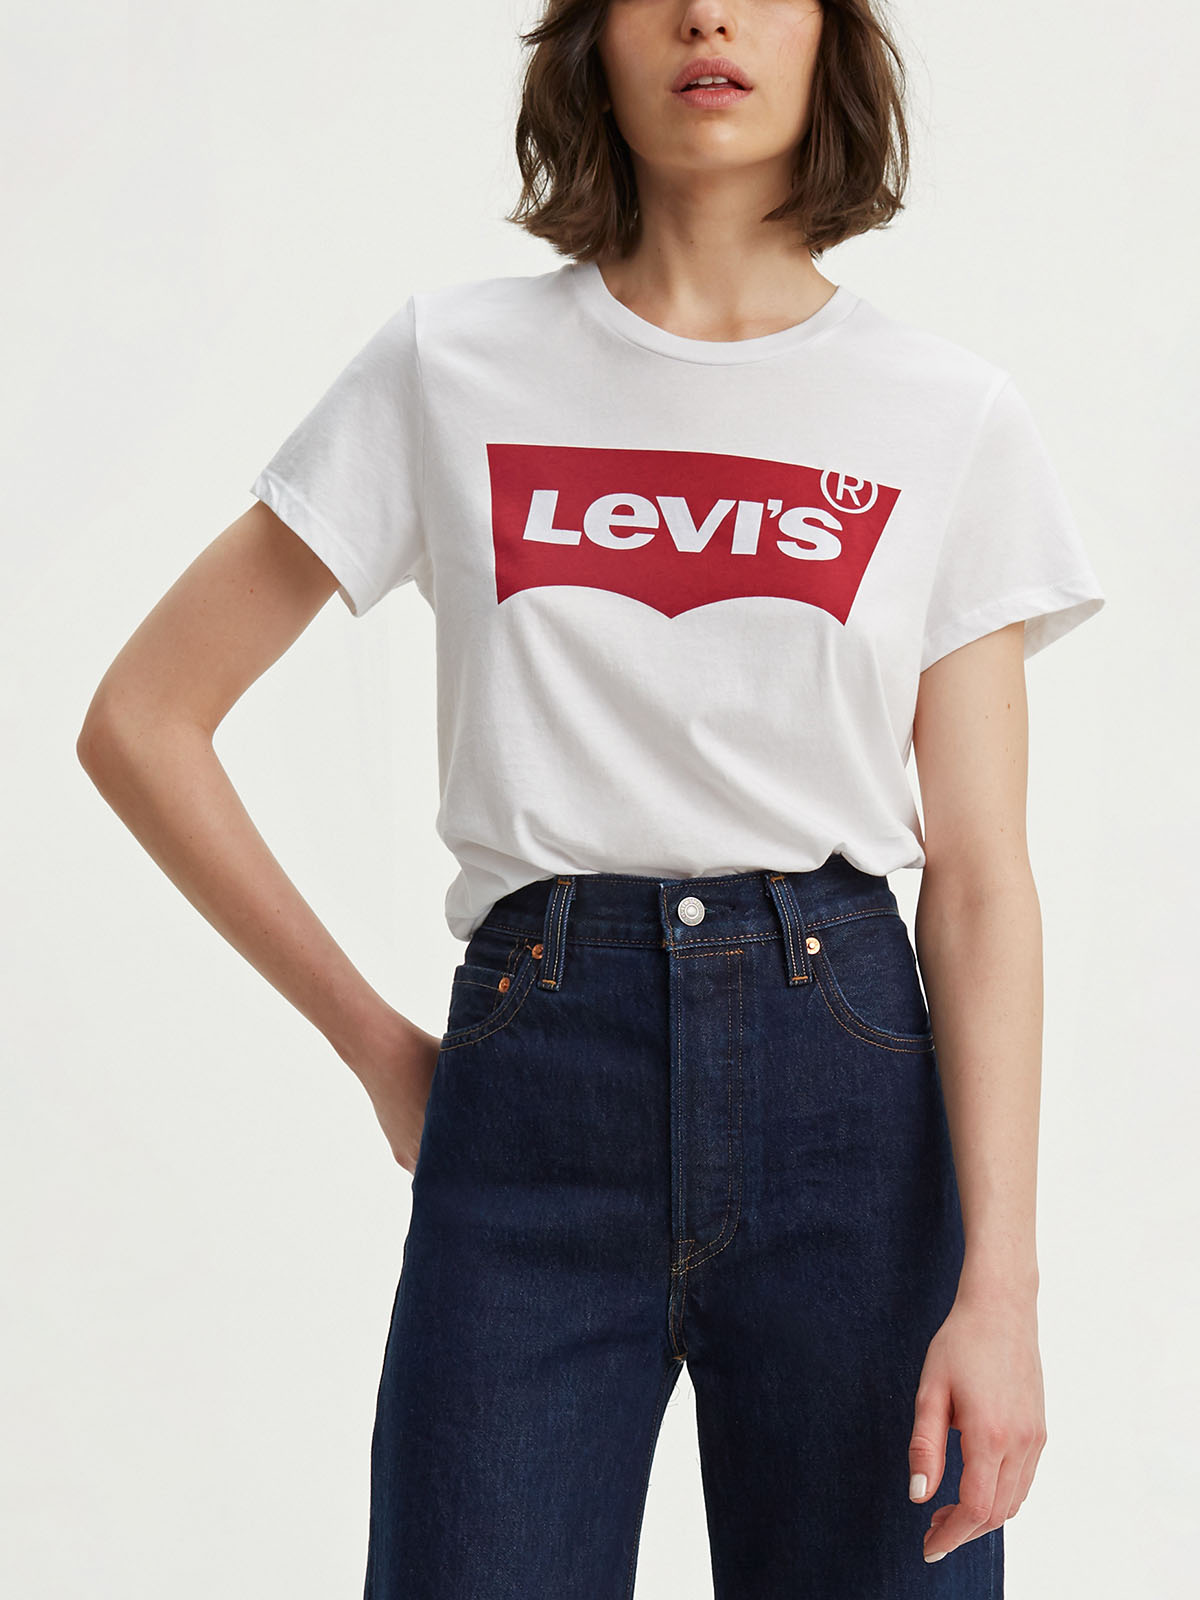 Levi’s® camiseta logo manga corta mujer 17369-0053 blanca